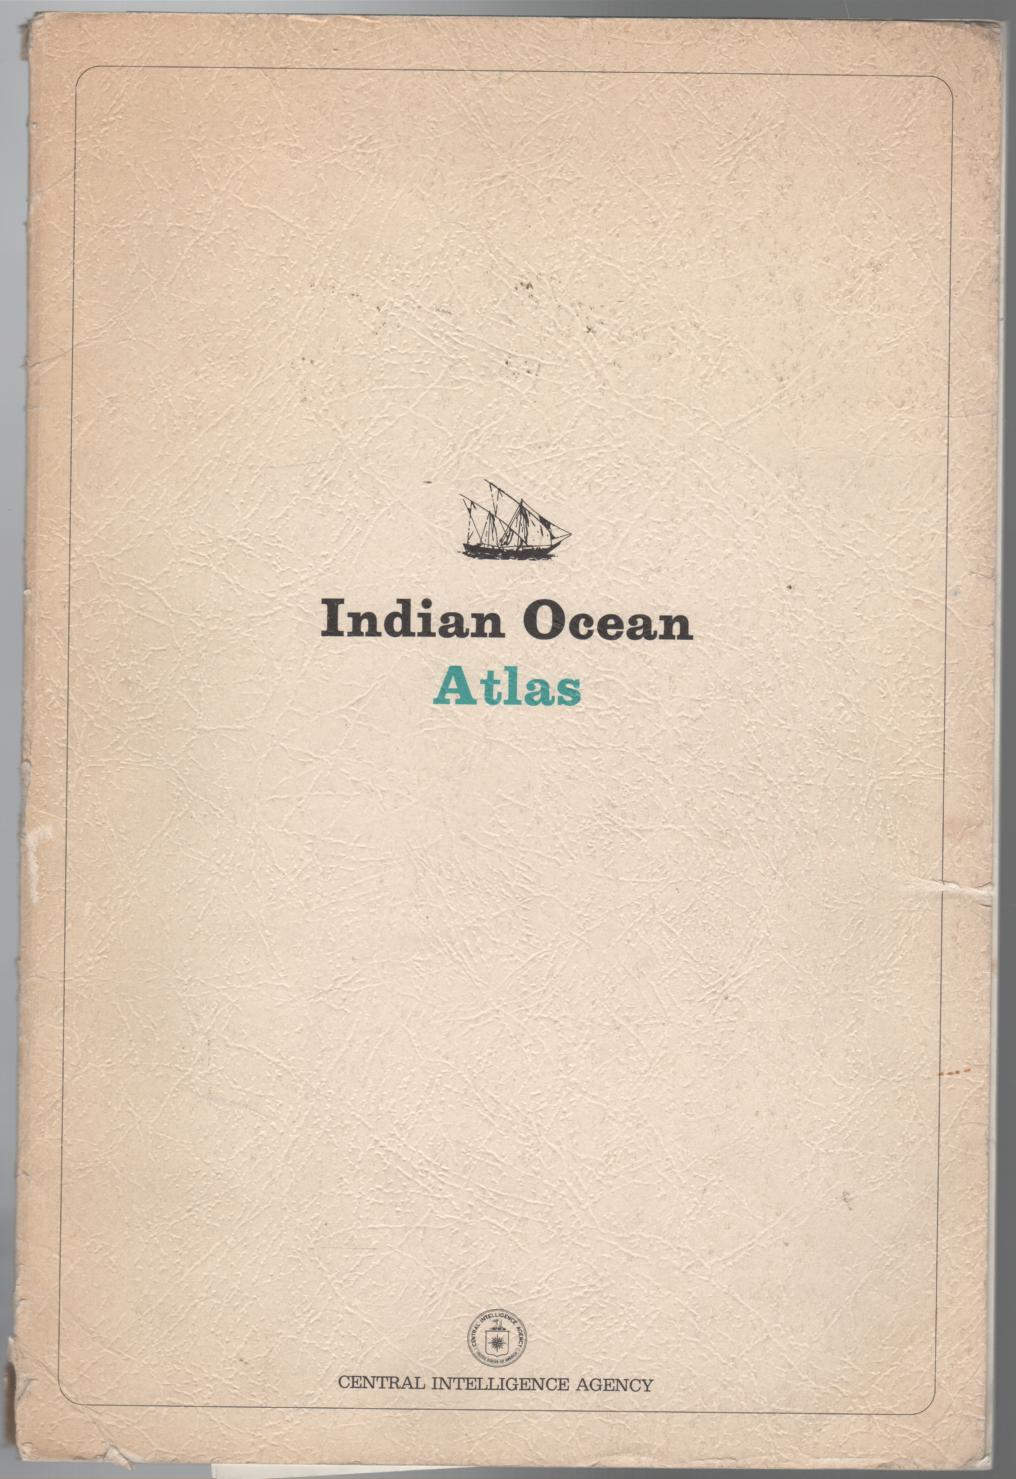 CENTRAL INTELLIGENCE AGENCY. - Indian Ocean Atlas.